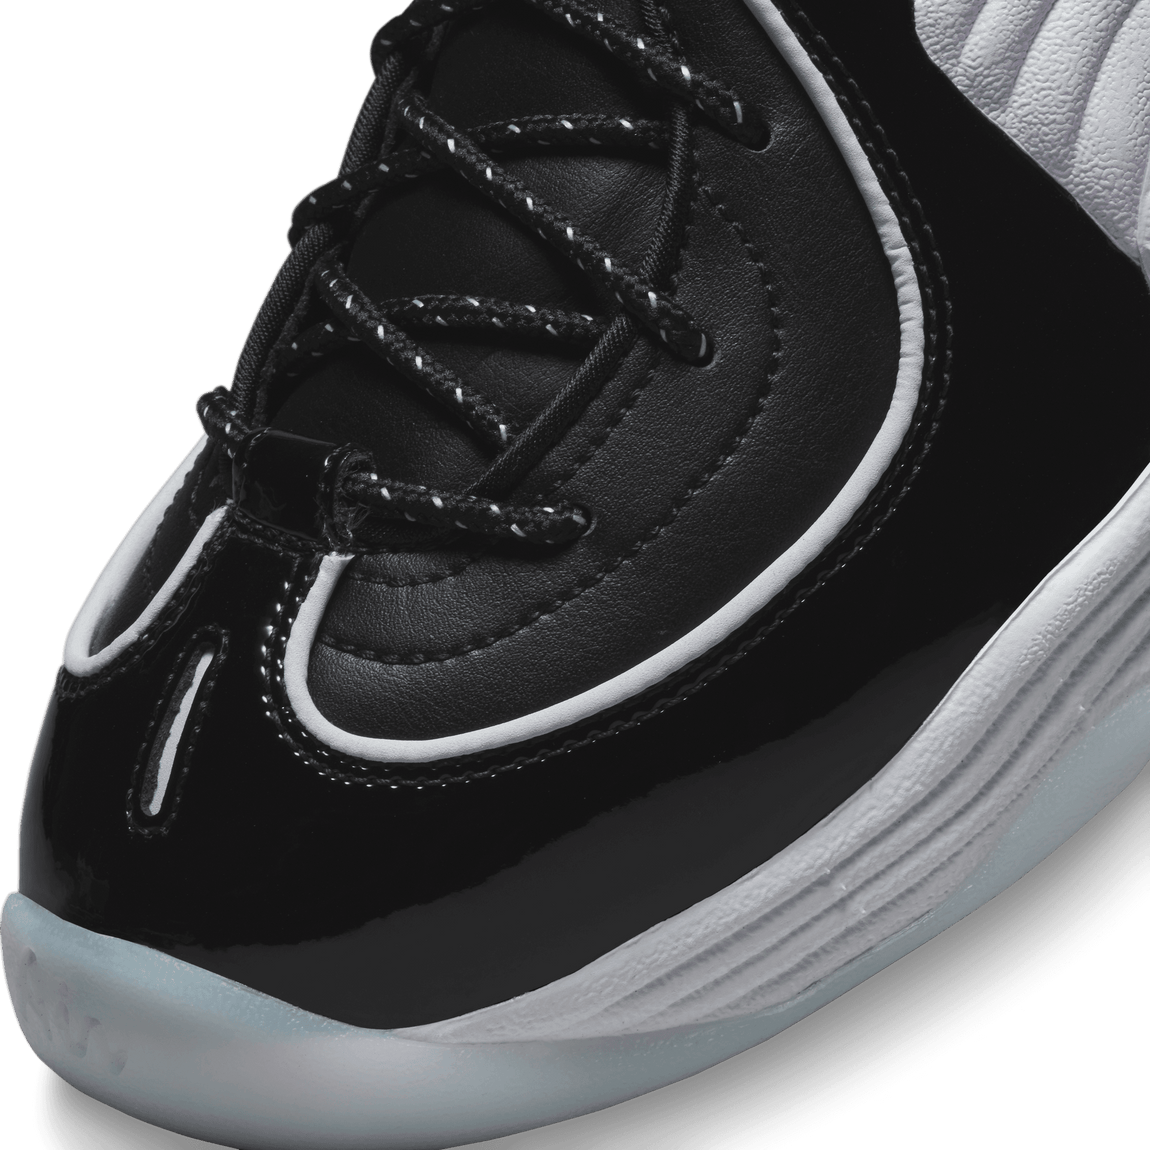 Nike Air Penny II (Black/Multicolor/White-Football Grey) 2/17 - Nike Air Penny II (Black/Multicolor/White-Football Grey) 2/17 - 